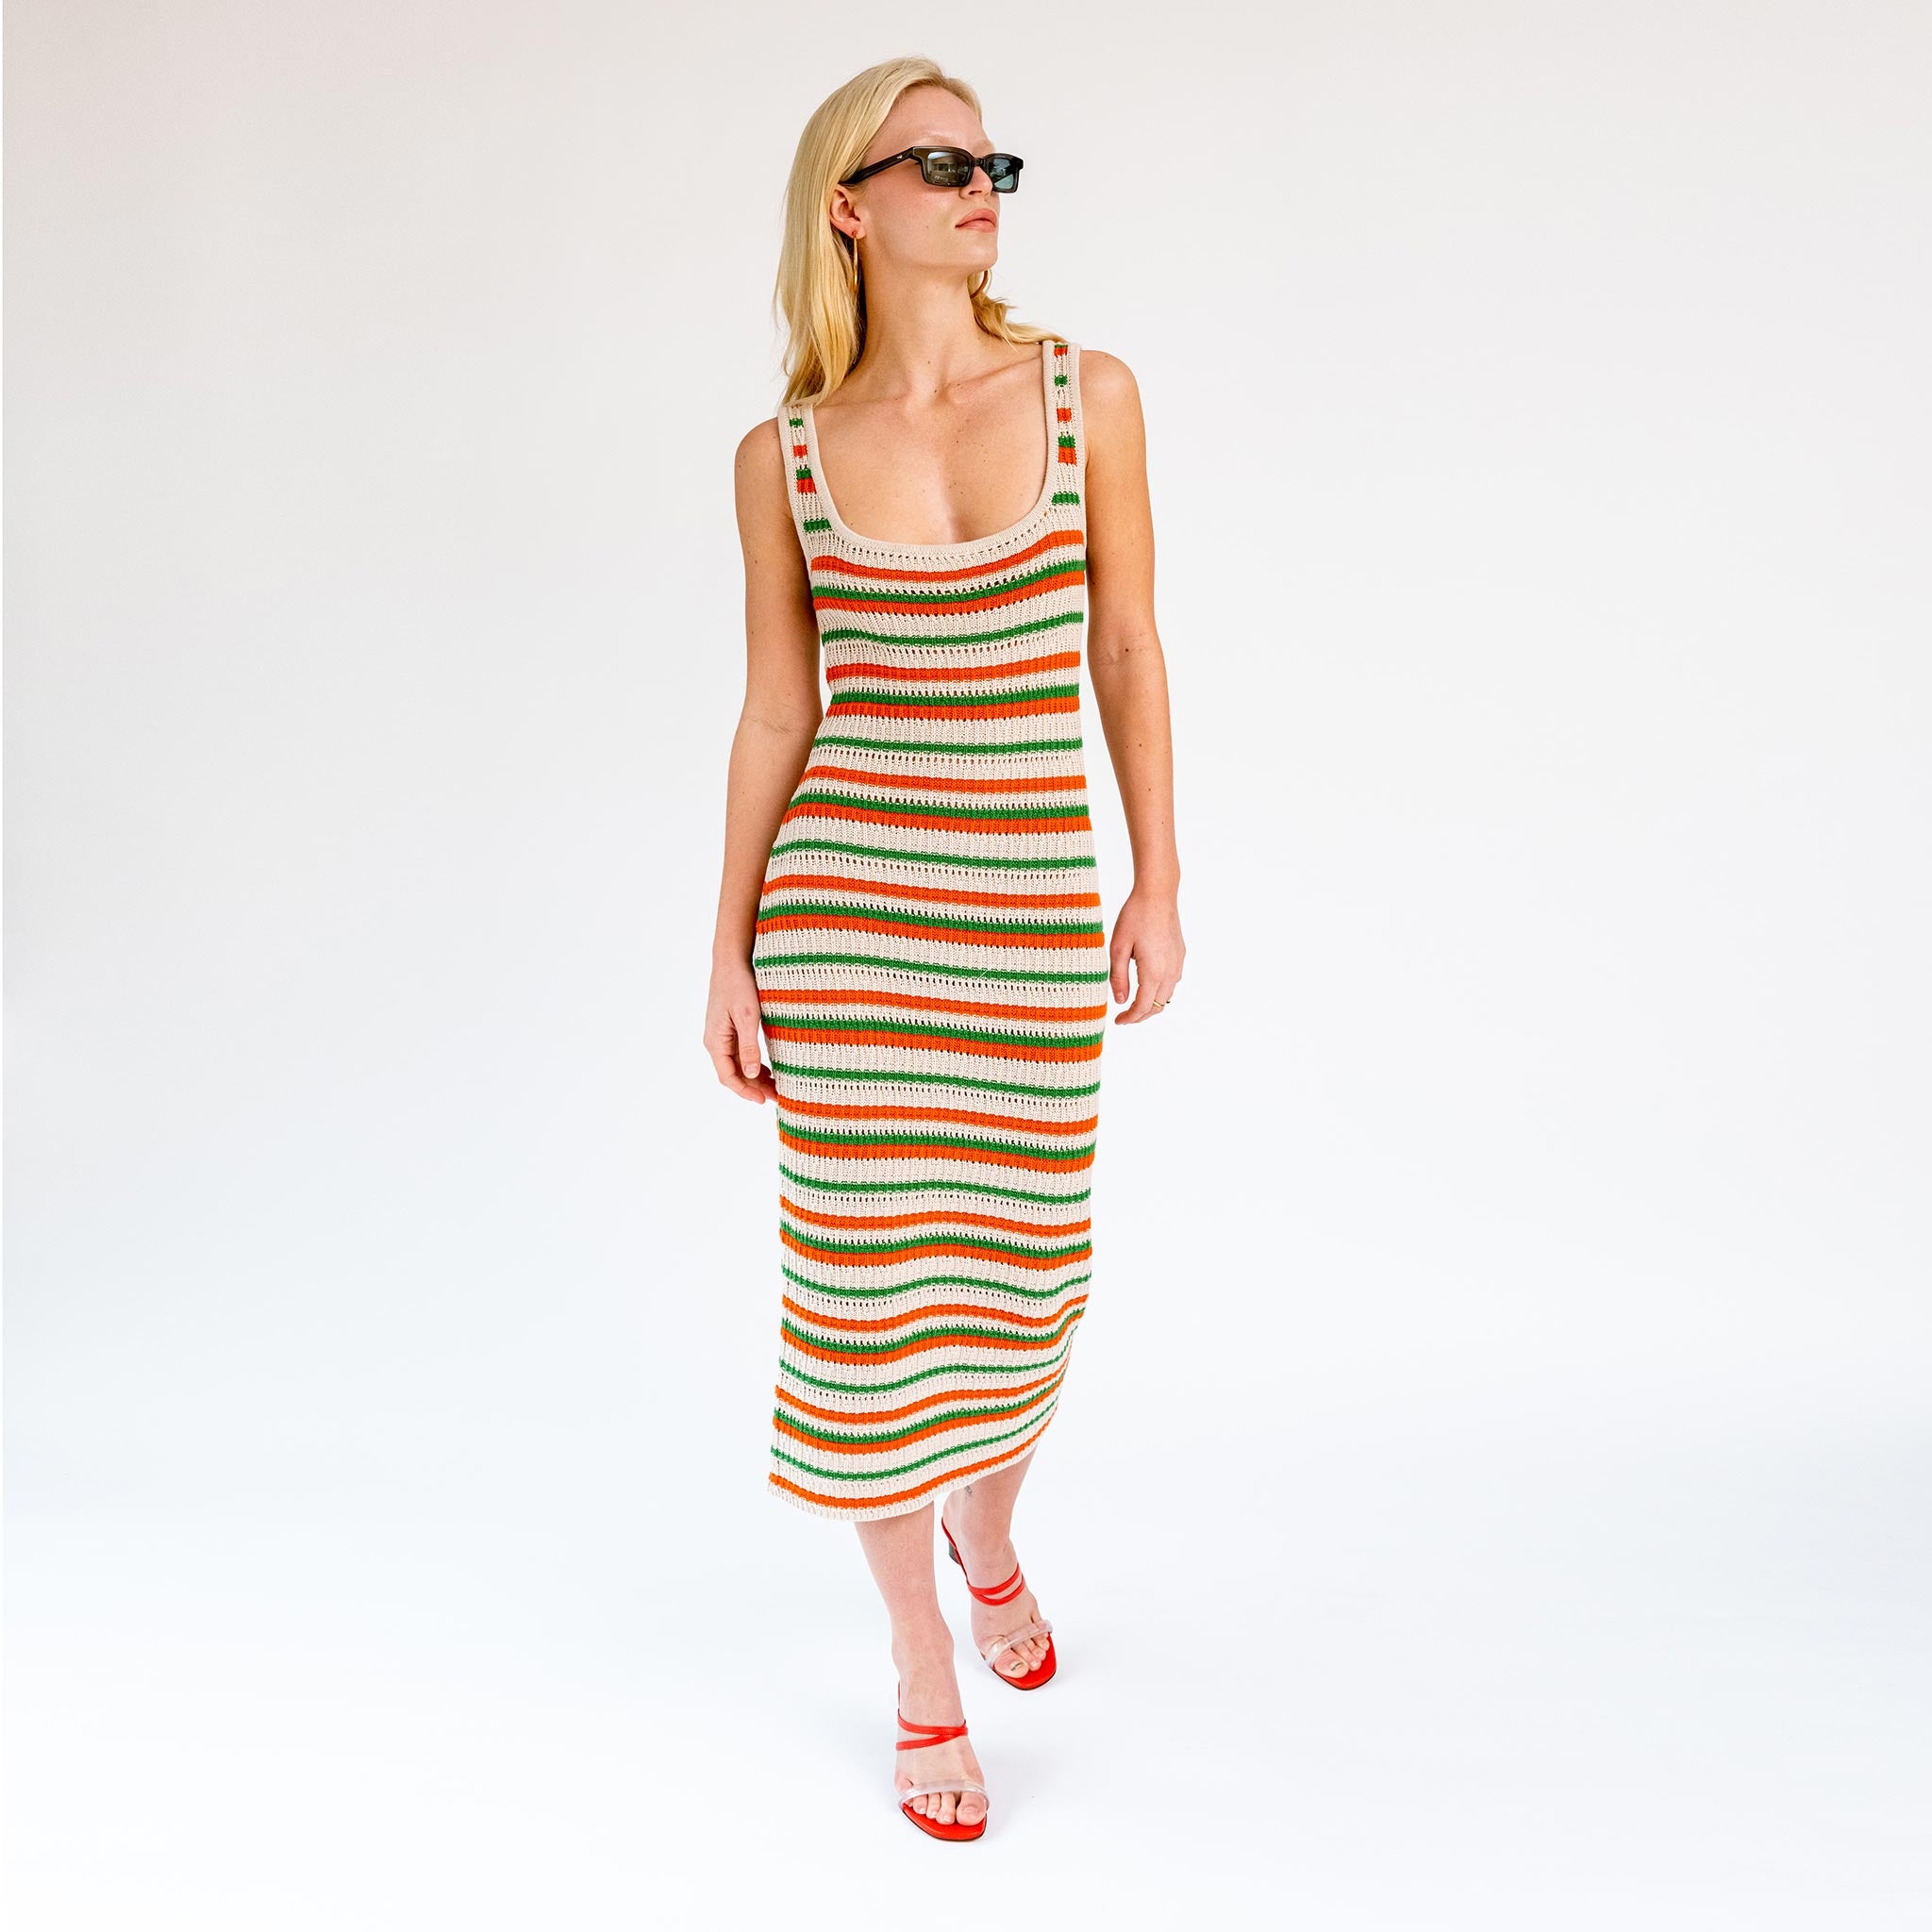 Full body photo of model wearing the Striped Knit Midi Dress - Green Orange